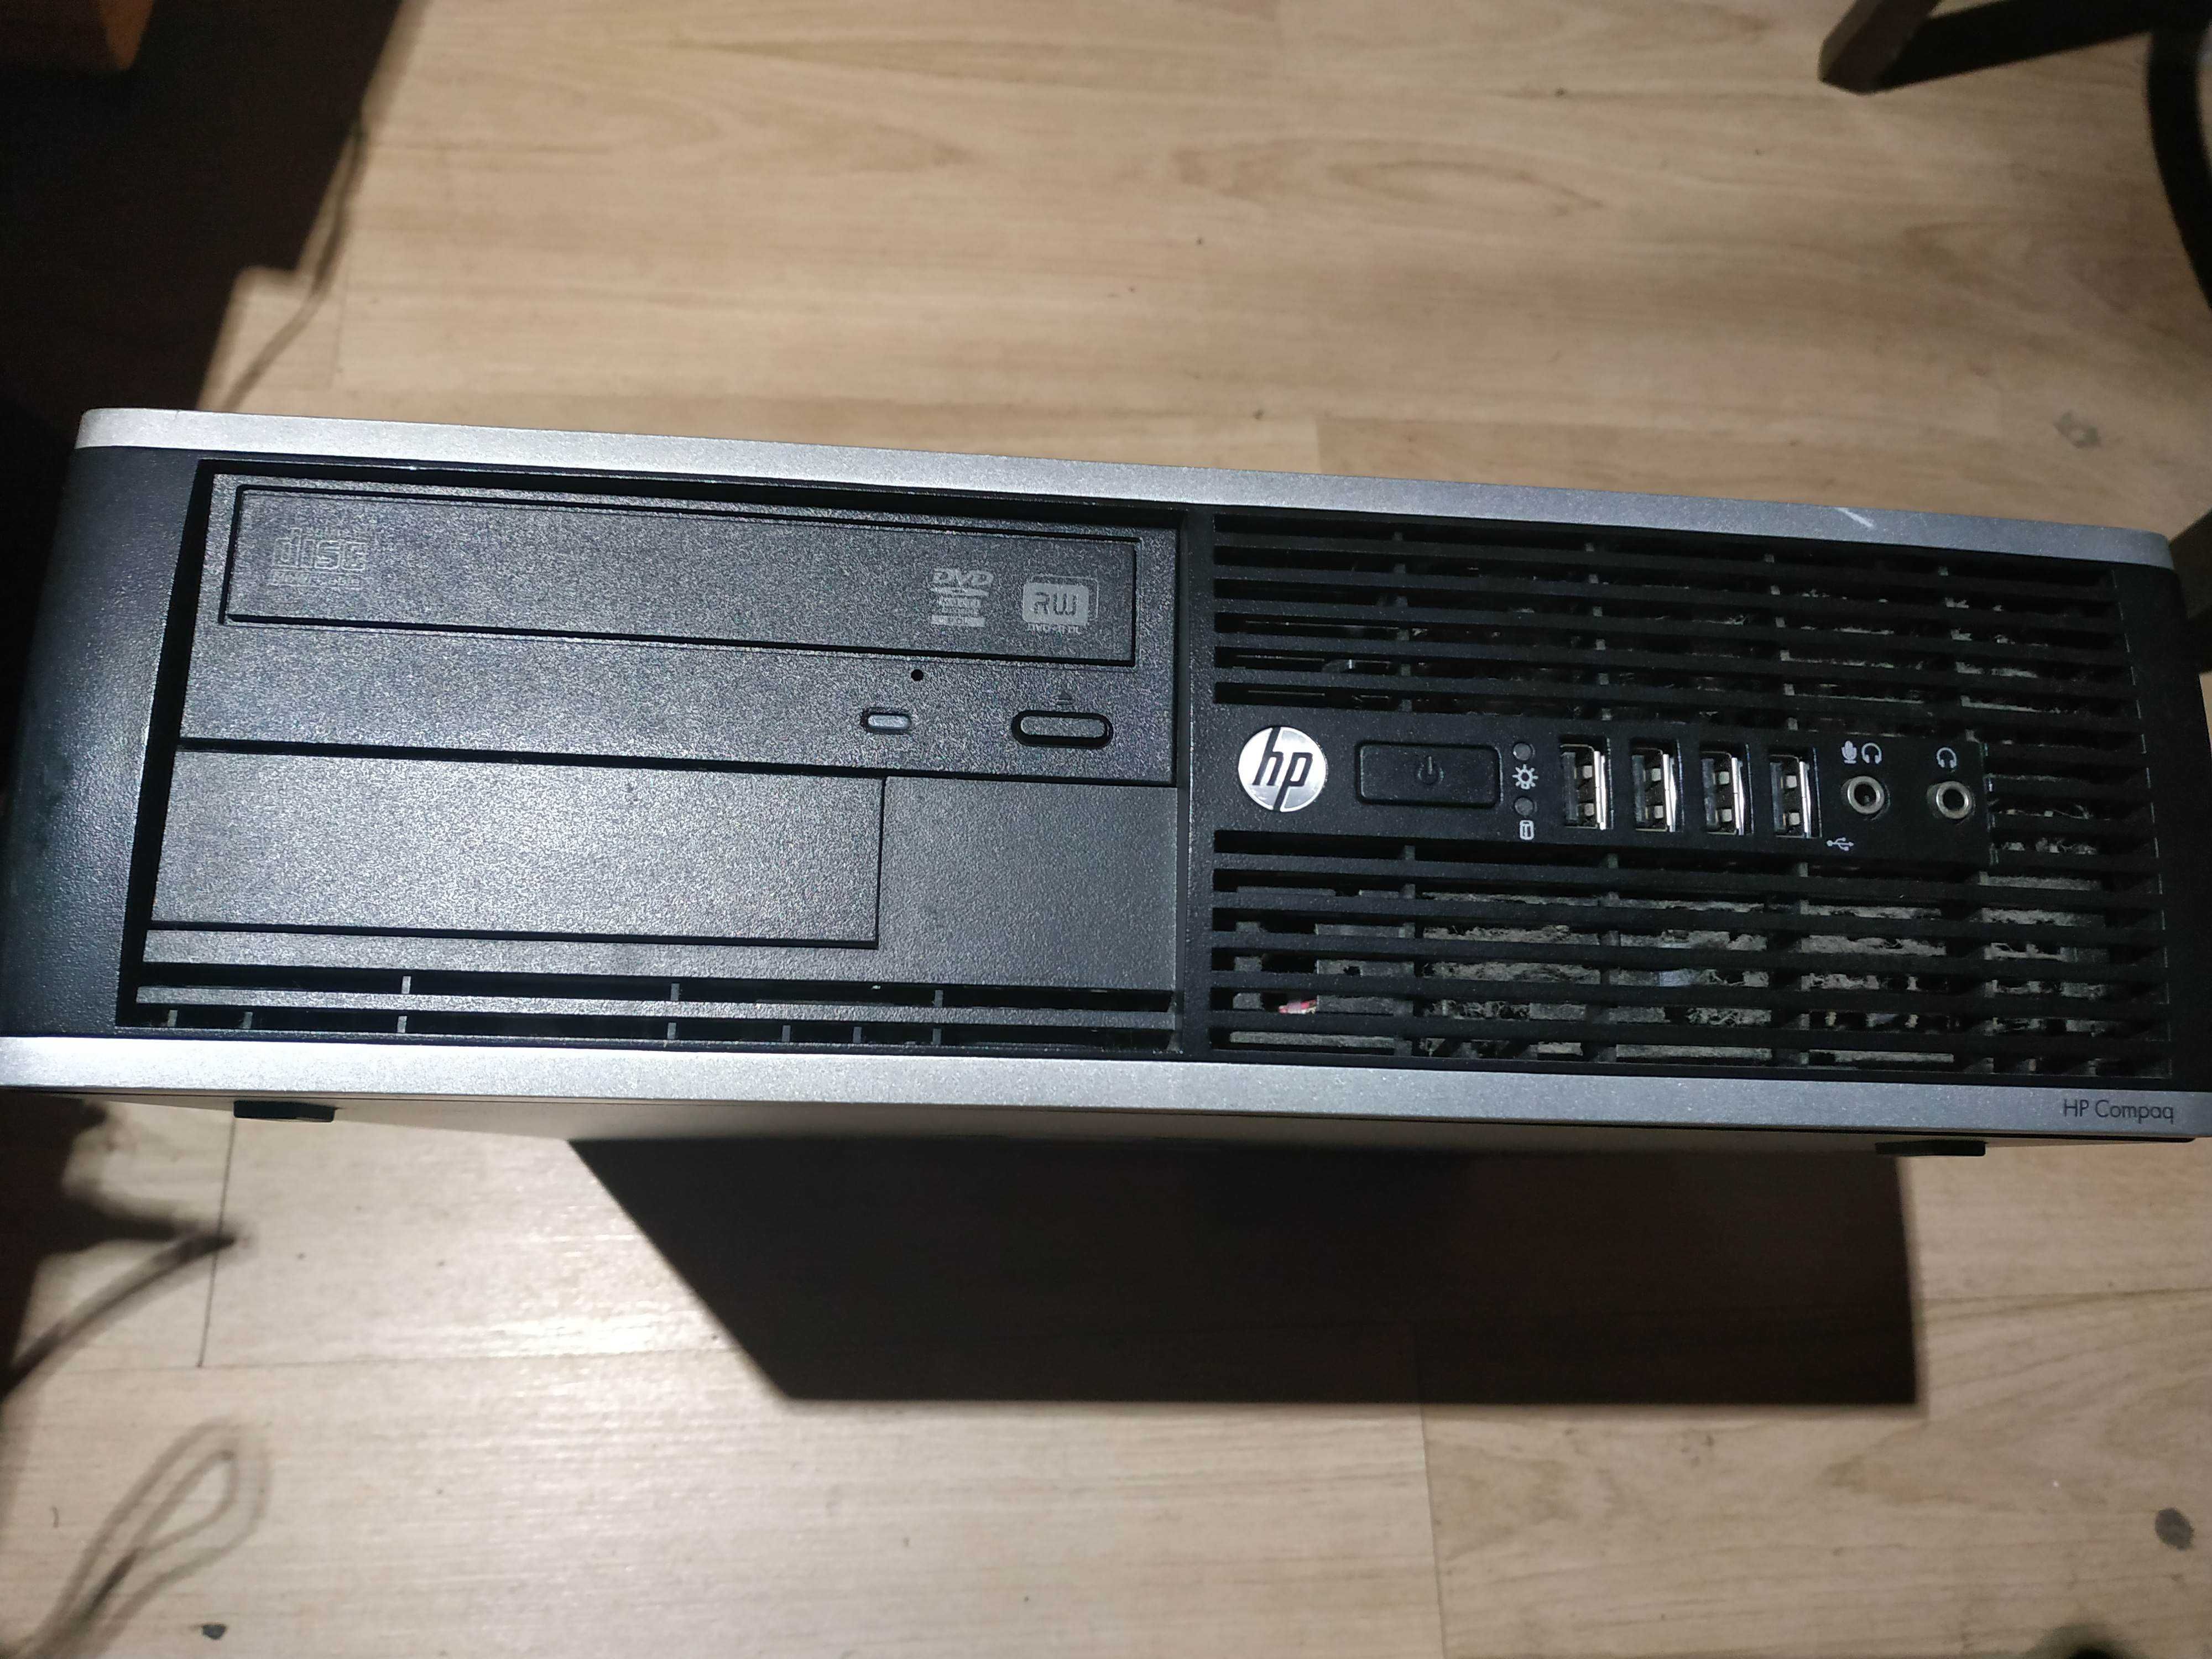 Komputere HP compaq pro 6305 small form factor sprawny bez dysku